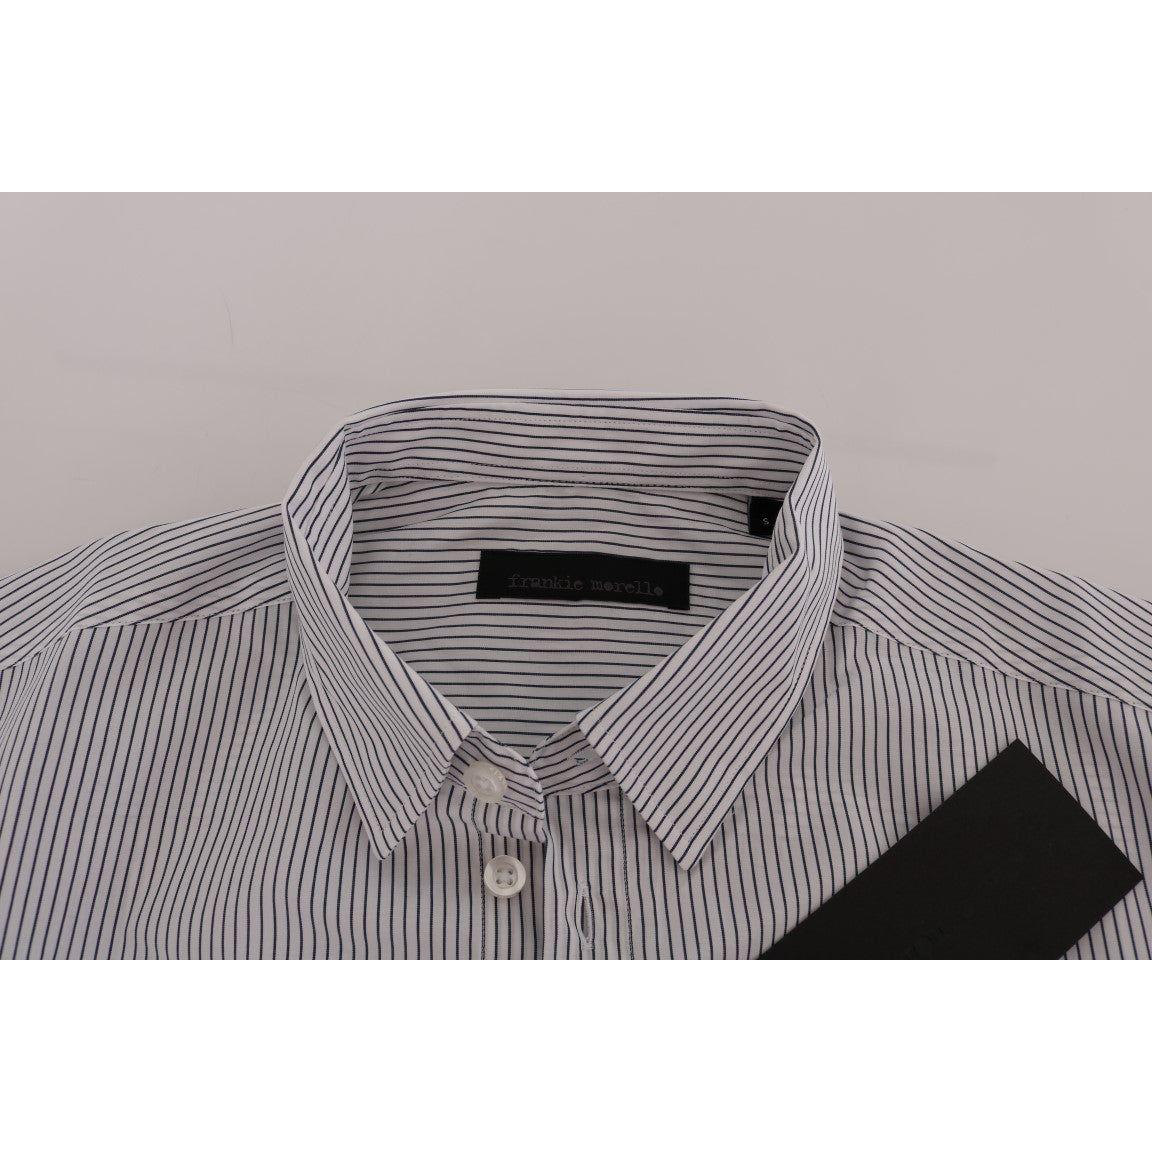 Frankie Morello Elegant White & Blue Striped Casual Shirt white-blue-striped-casual-cotton-regular-fit-shirt 457870-white-blue-striped-casual-cotton-regular-fit-shirt-5.jpg